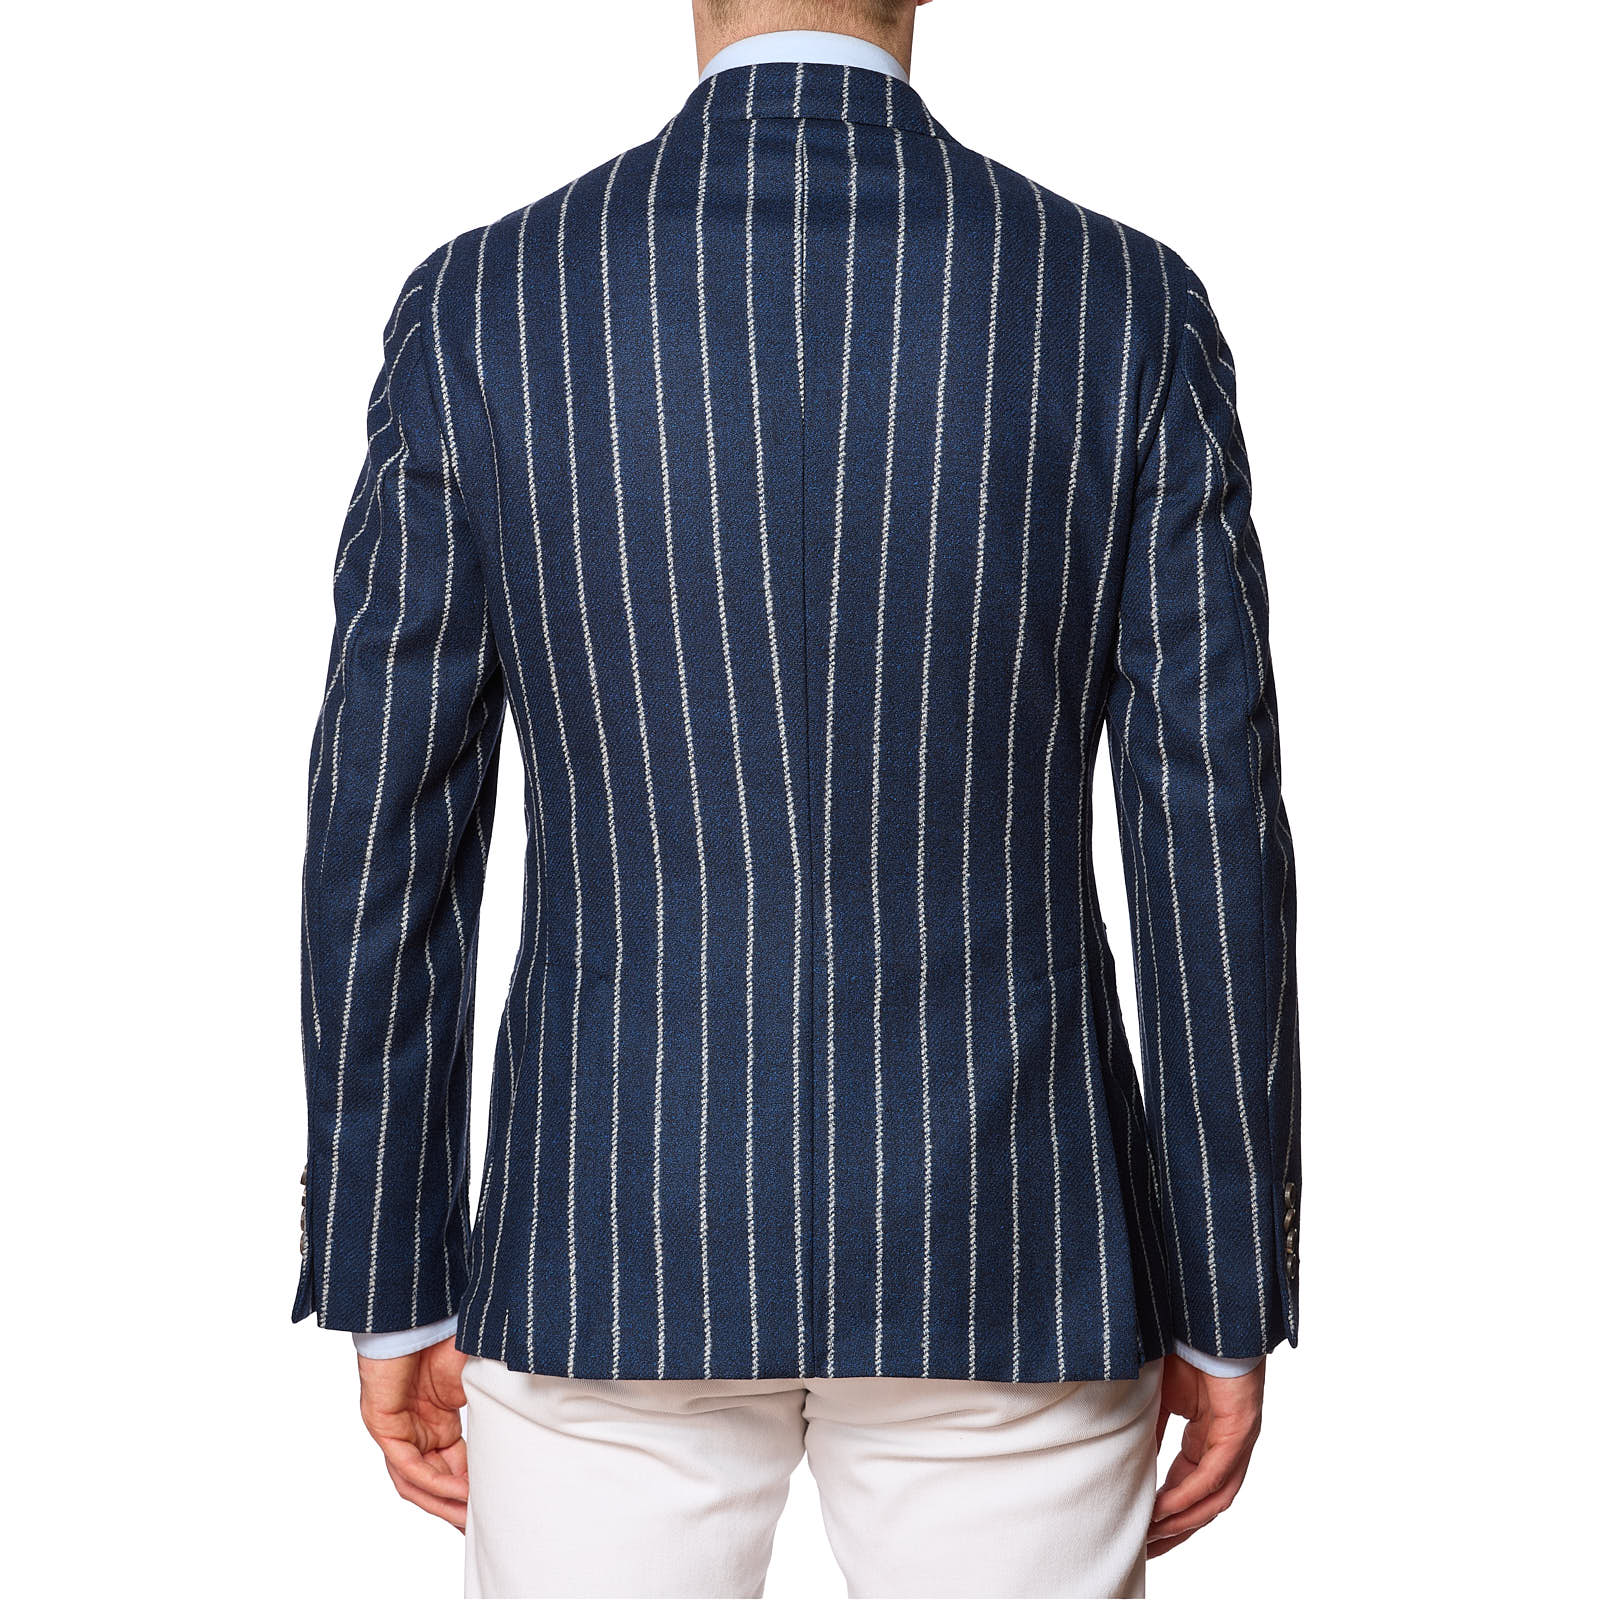 SARTORIA PARTENOPEA Blue Chalk Striped Wool Jacket NEW Current Model